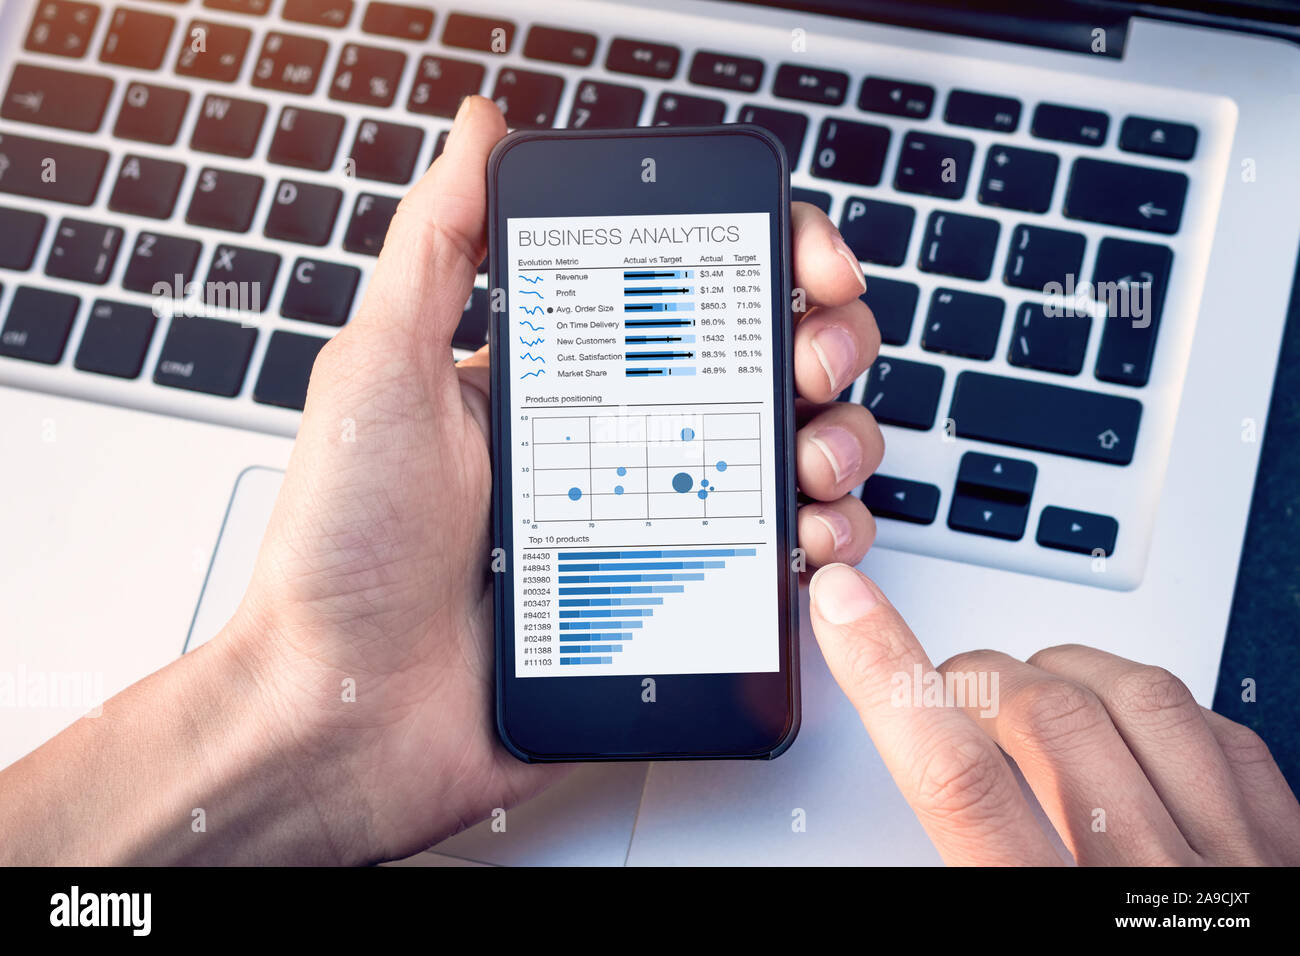 Business analytics dashboard on smartphone screen, analyst analyzing sales and operations data key performance indicators (KPI) charts and metrics Stock Photo